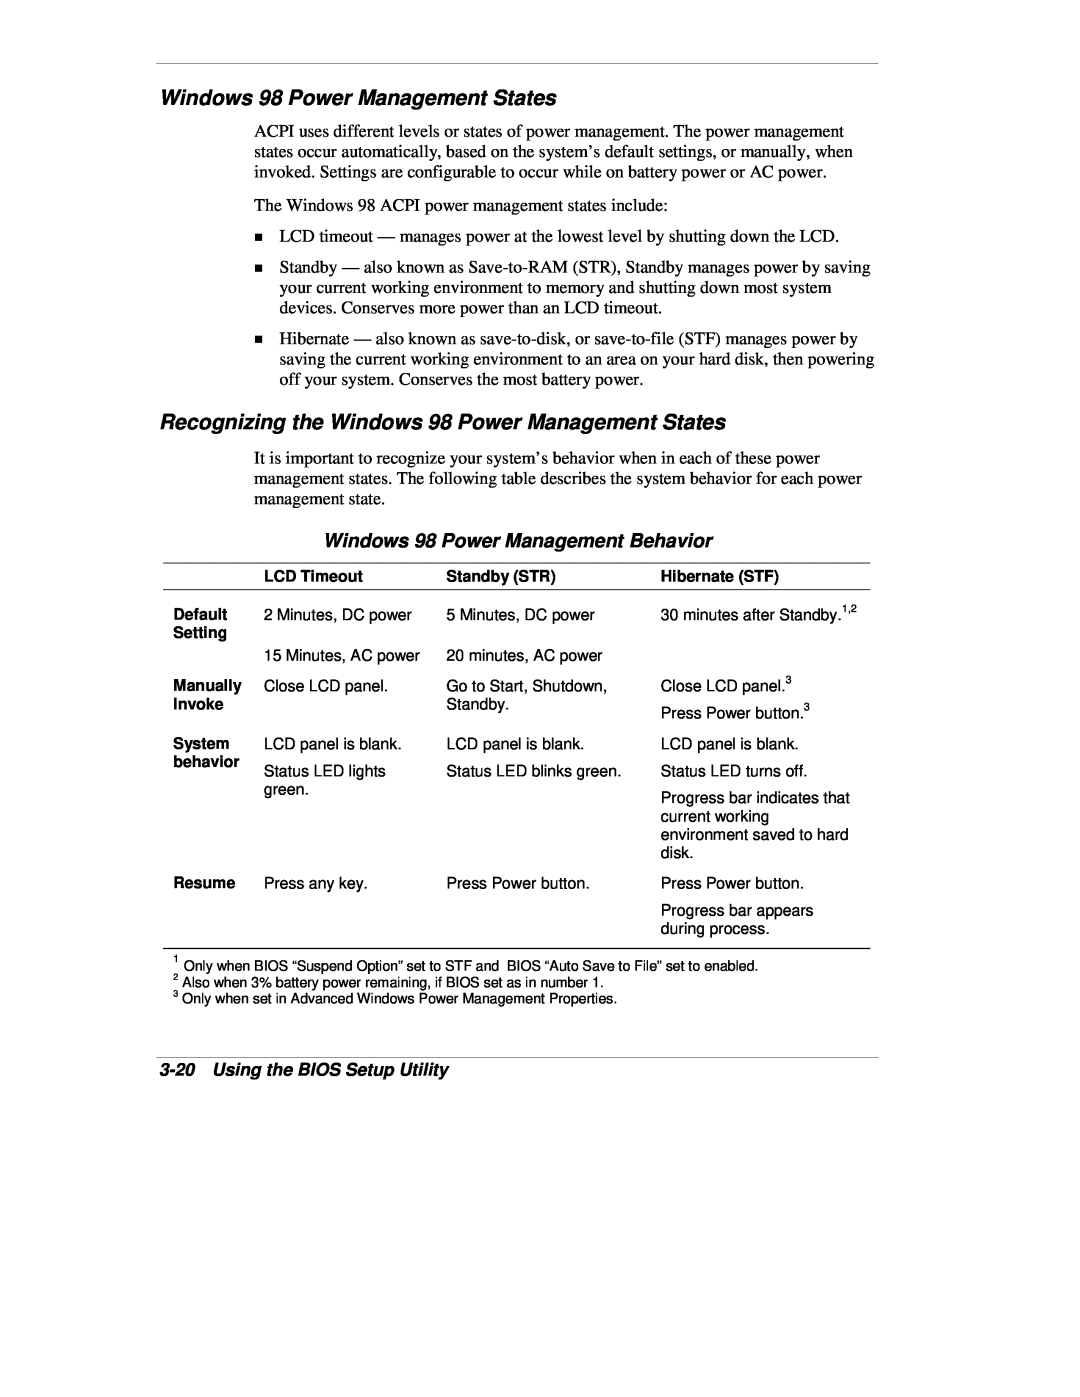 NEC VX manual Recognizing the Windows 98 Power Management States, Windows 98 Power Management Behavior 